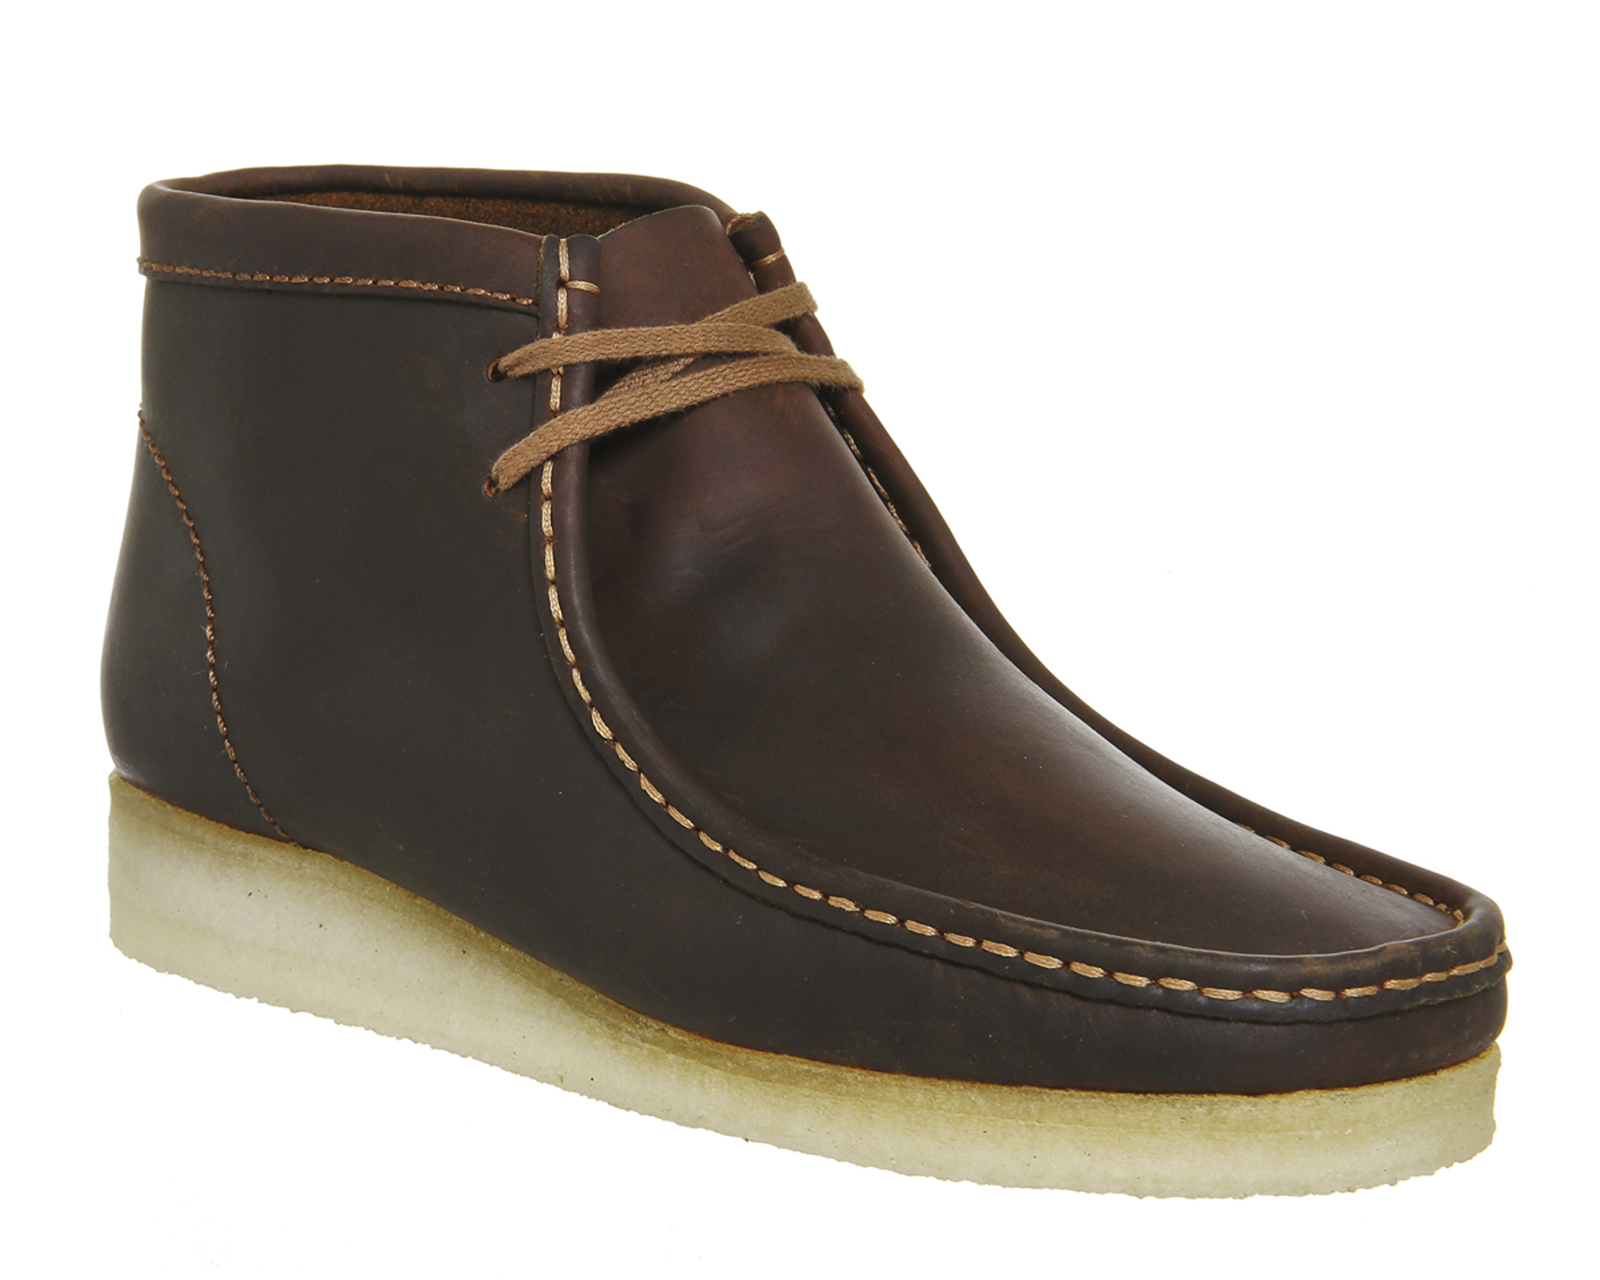 Clarks OriginalsWallabee BootsBeeswax Leather